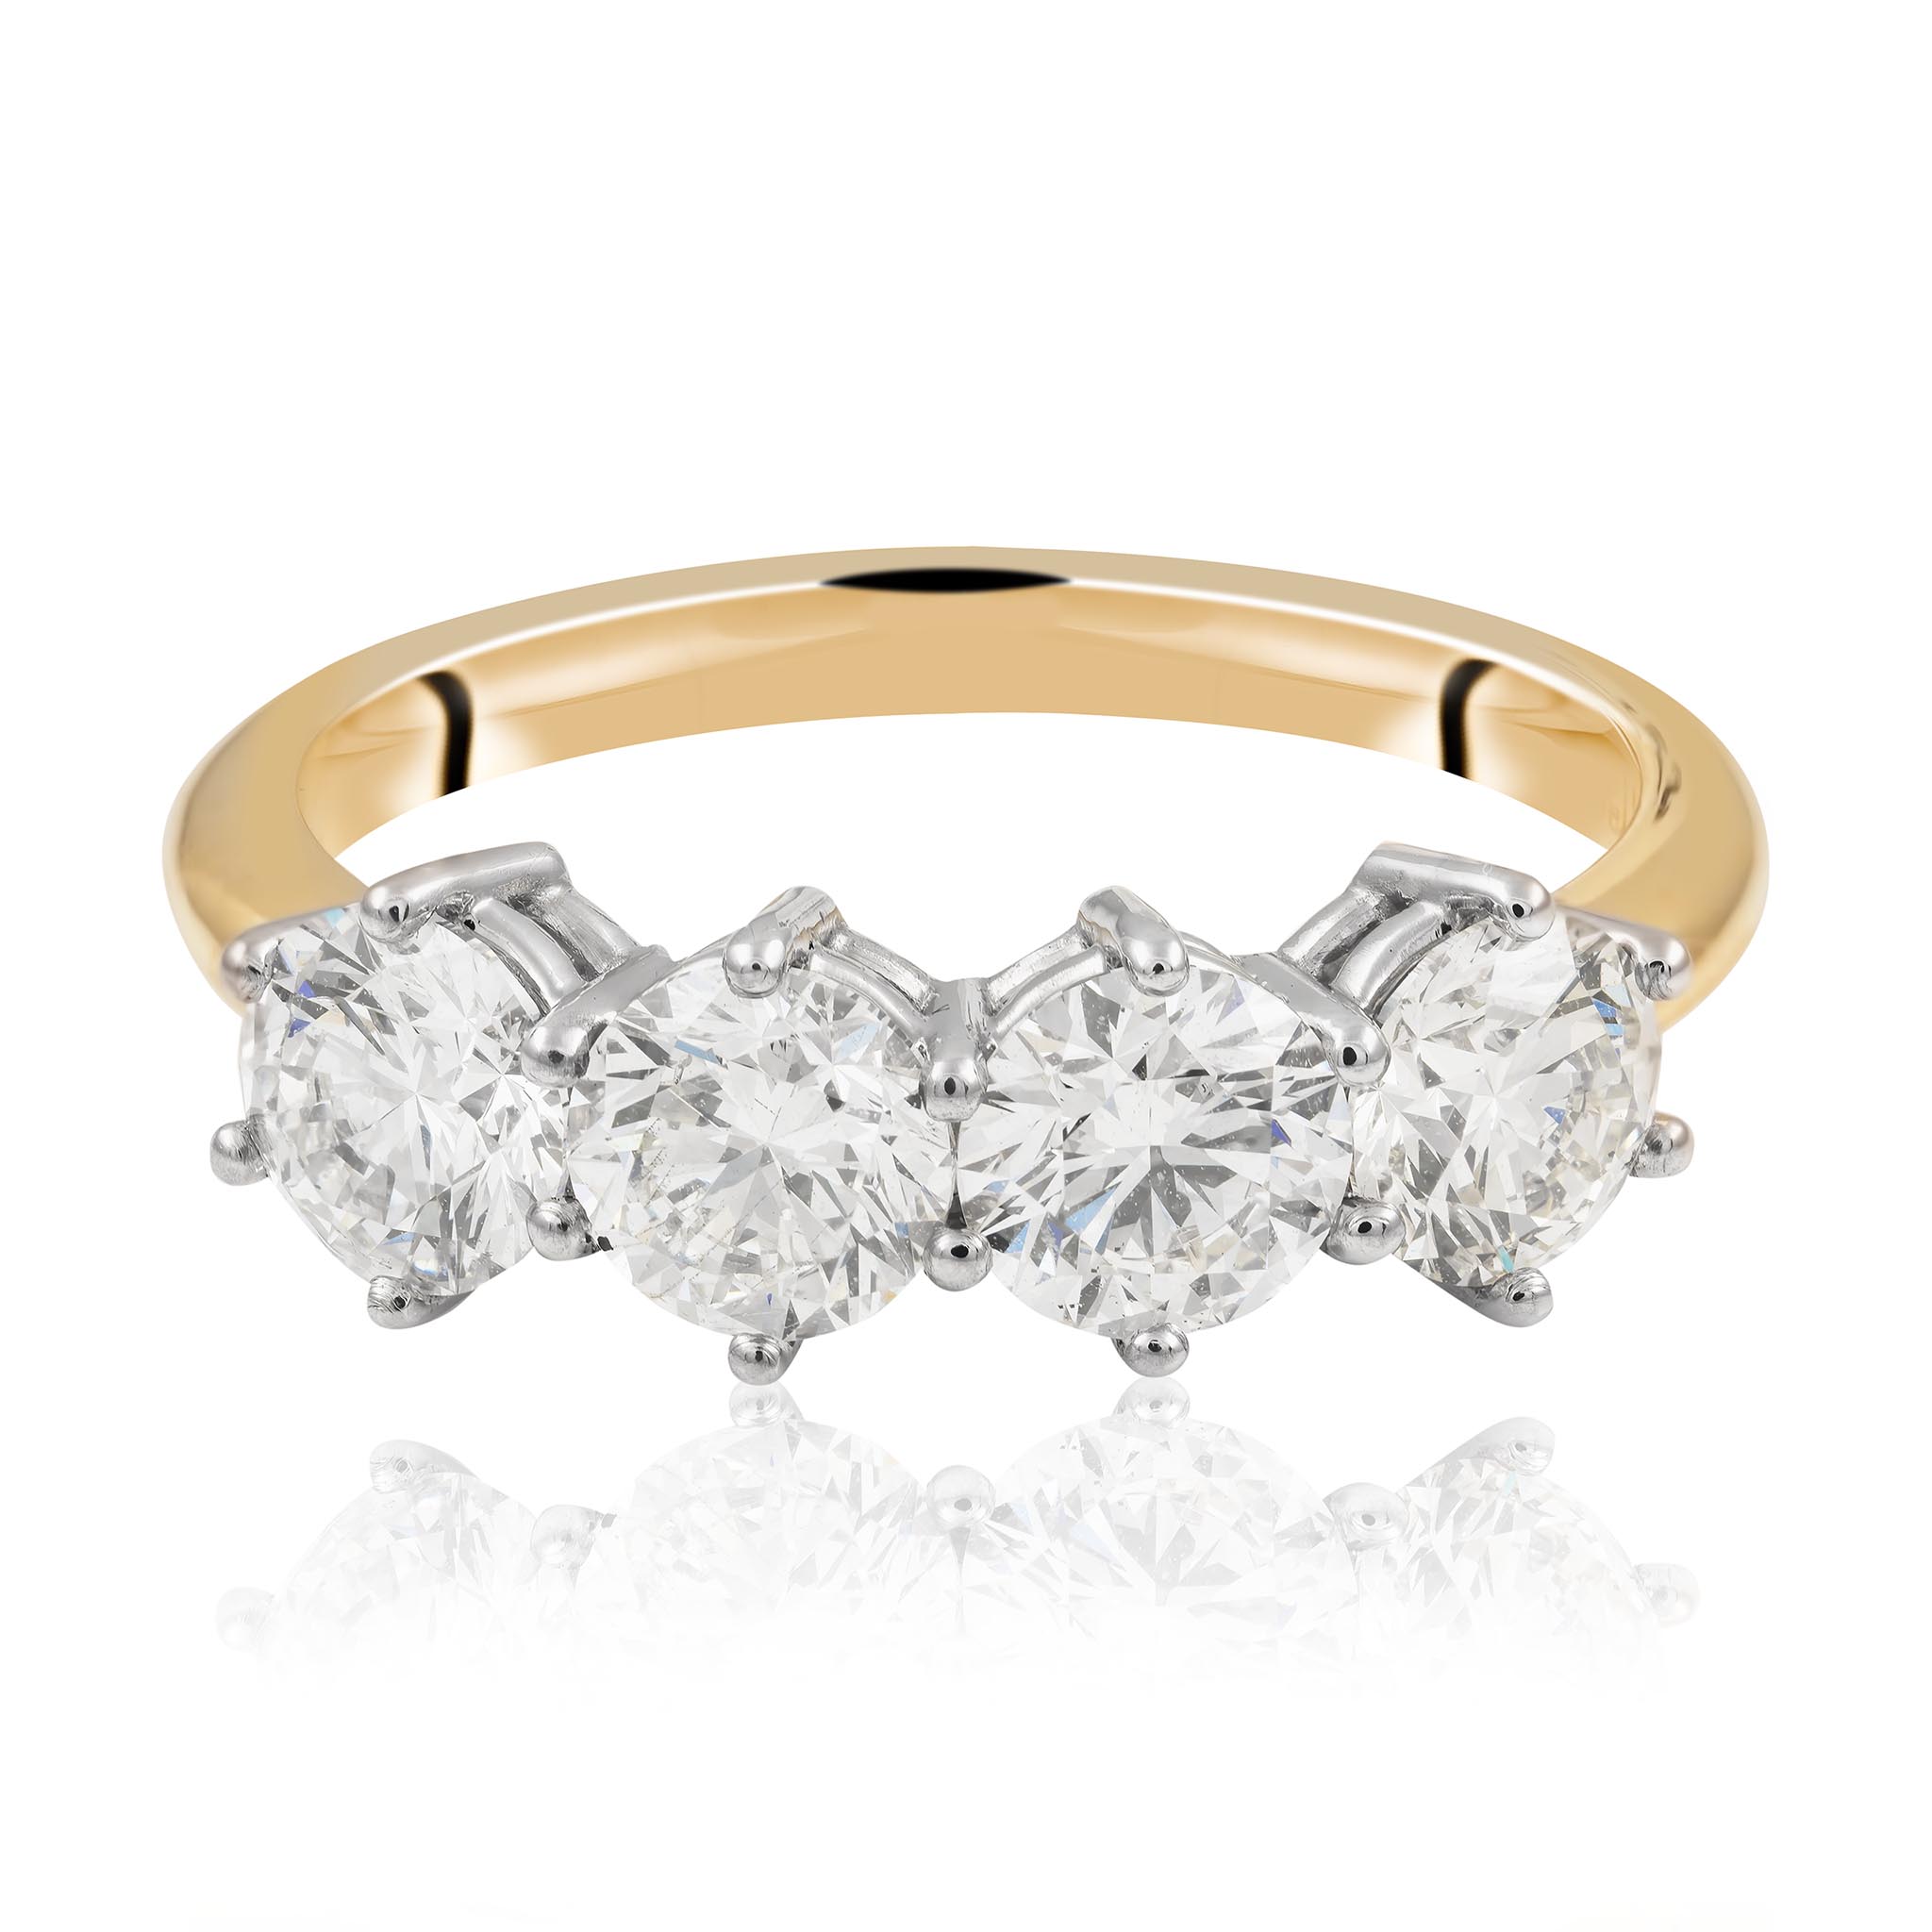 Greenwich 4 Ruby & Diamond Ring in 14k Gold (July)